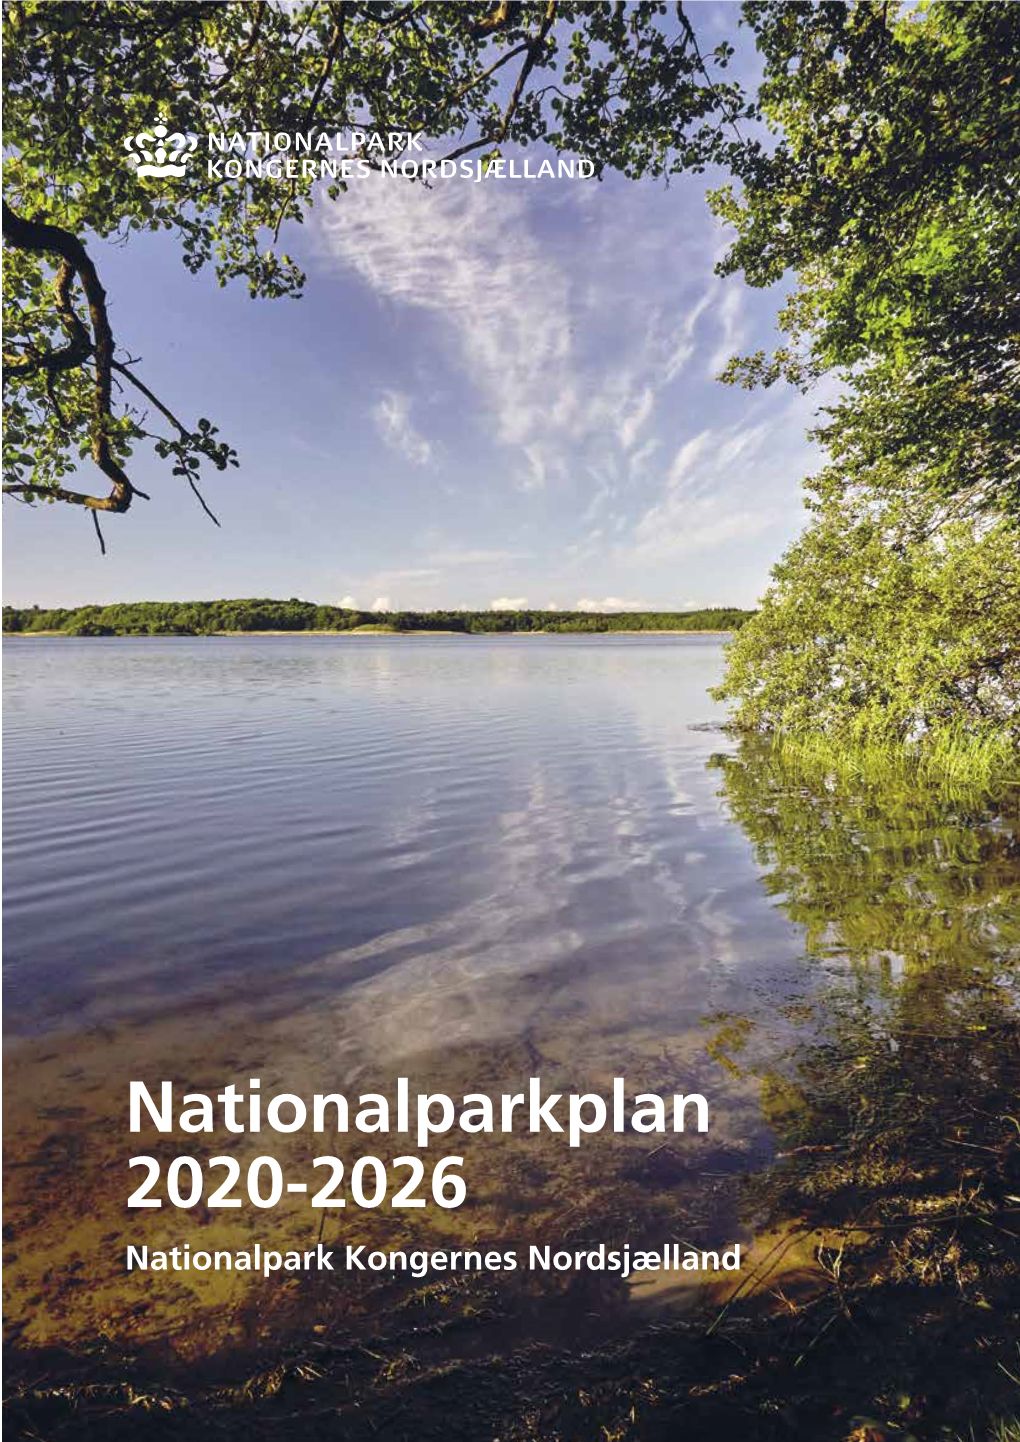 Nationalparkplan 2020-2026 for Nationalpark Kongernes